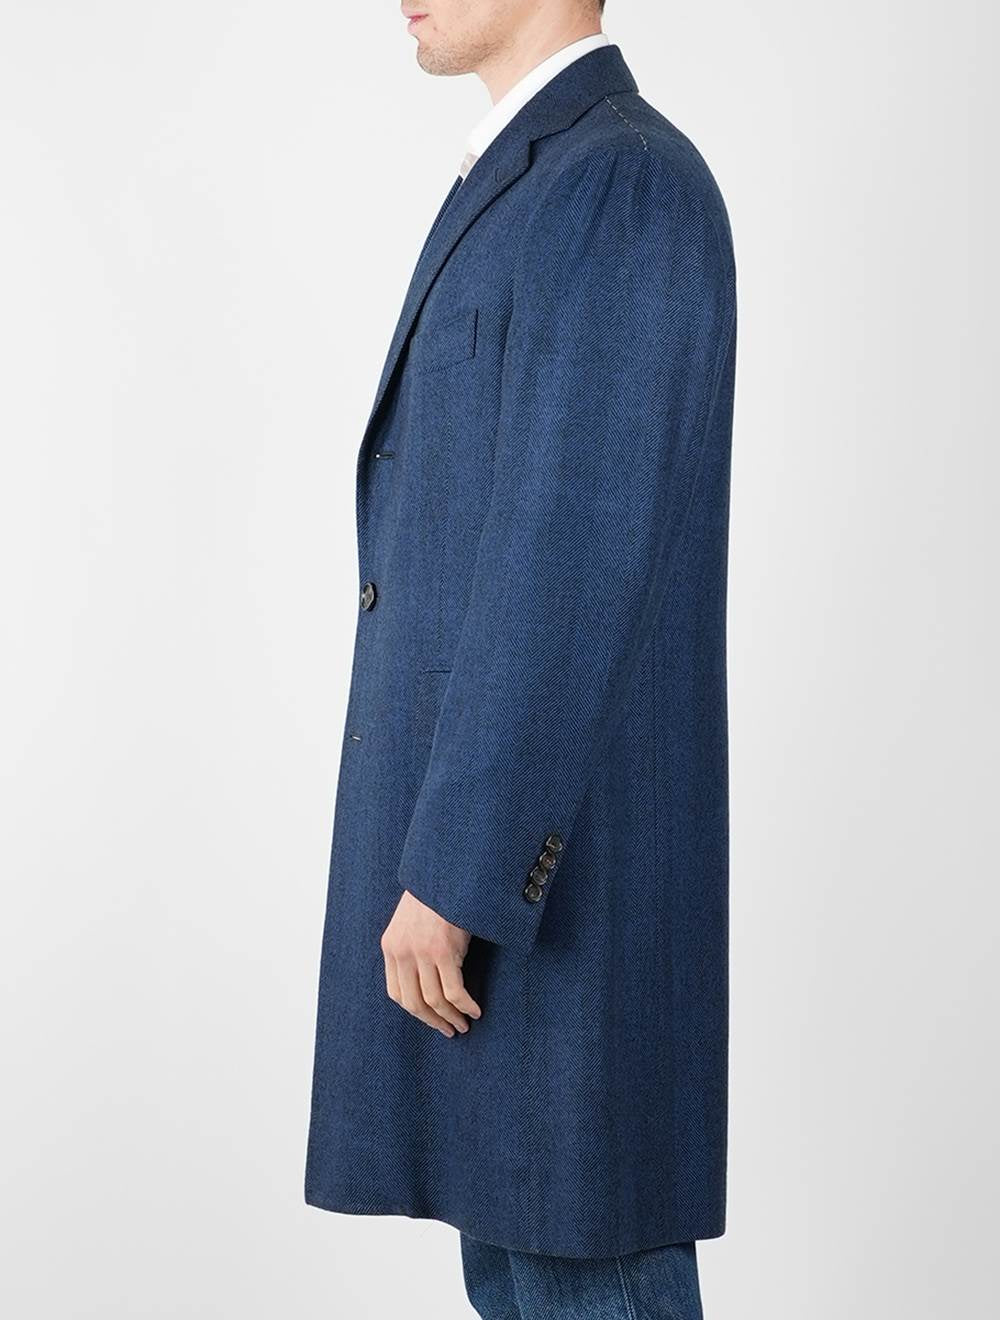 Cesare Attolini Abrigo azul de cachemira y lana de cordero